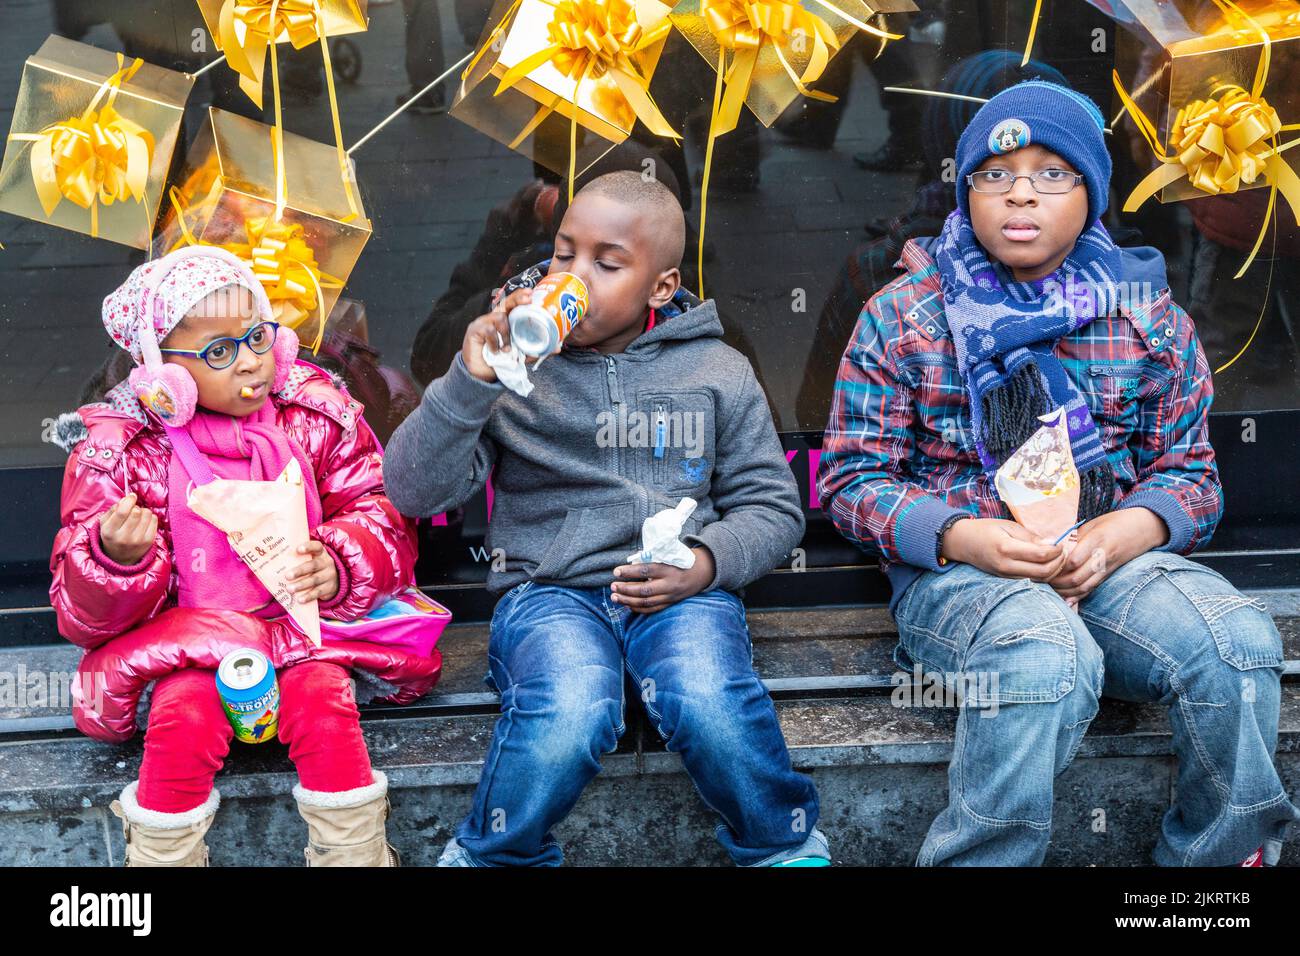 Tres niños africanos sentados degustando especialidades belgas. Foto de stock